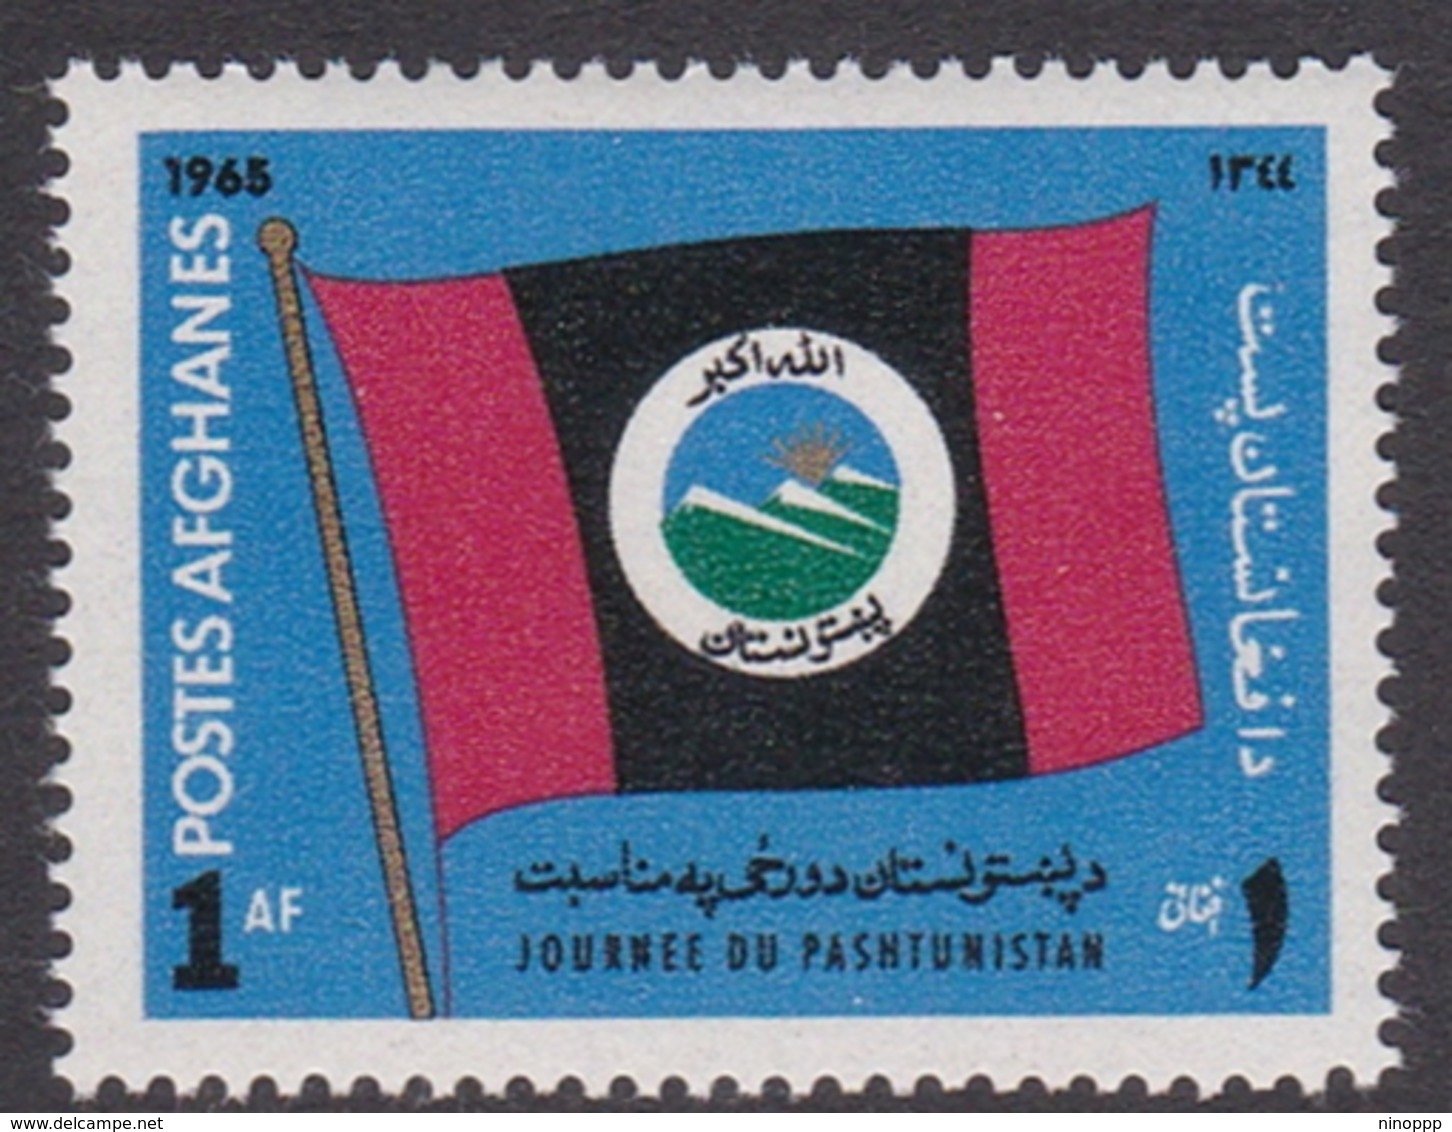 Afghanistan SG 555  1965 Pashtunistan Day MNH - Afghanistan